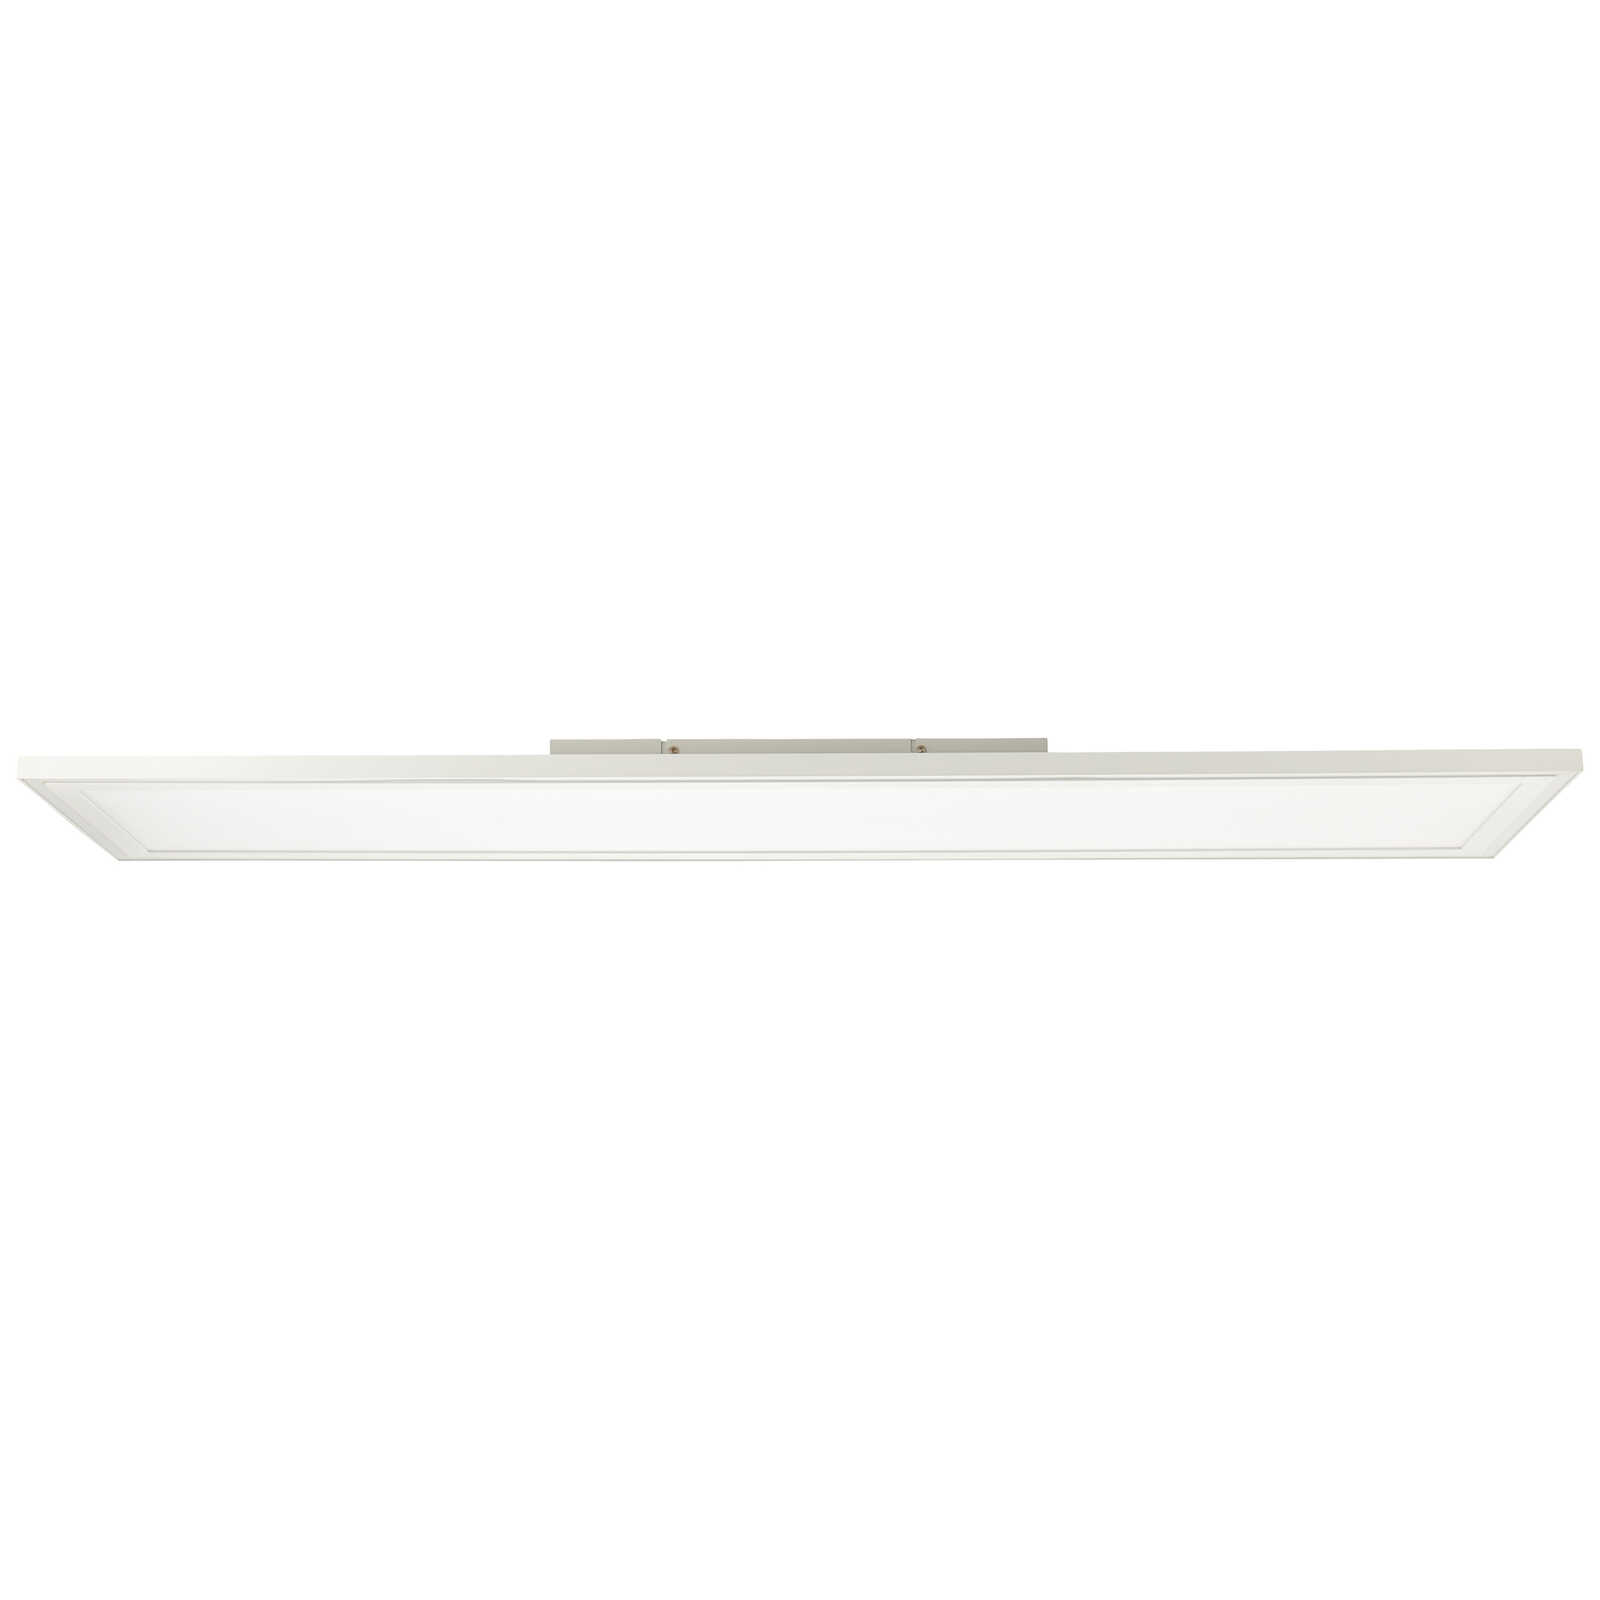             Metalen plafondlamp - Klaas 3 - Wit
        